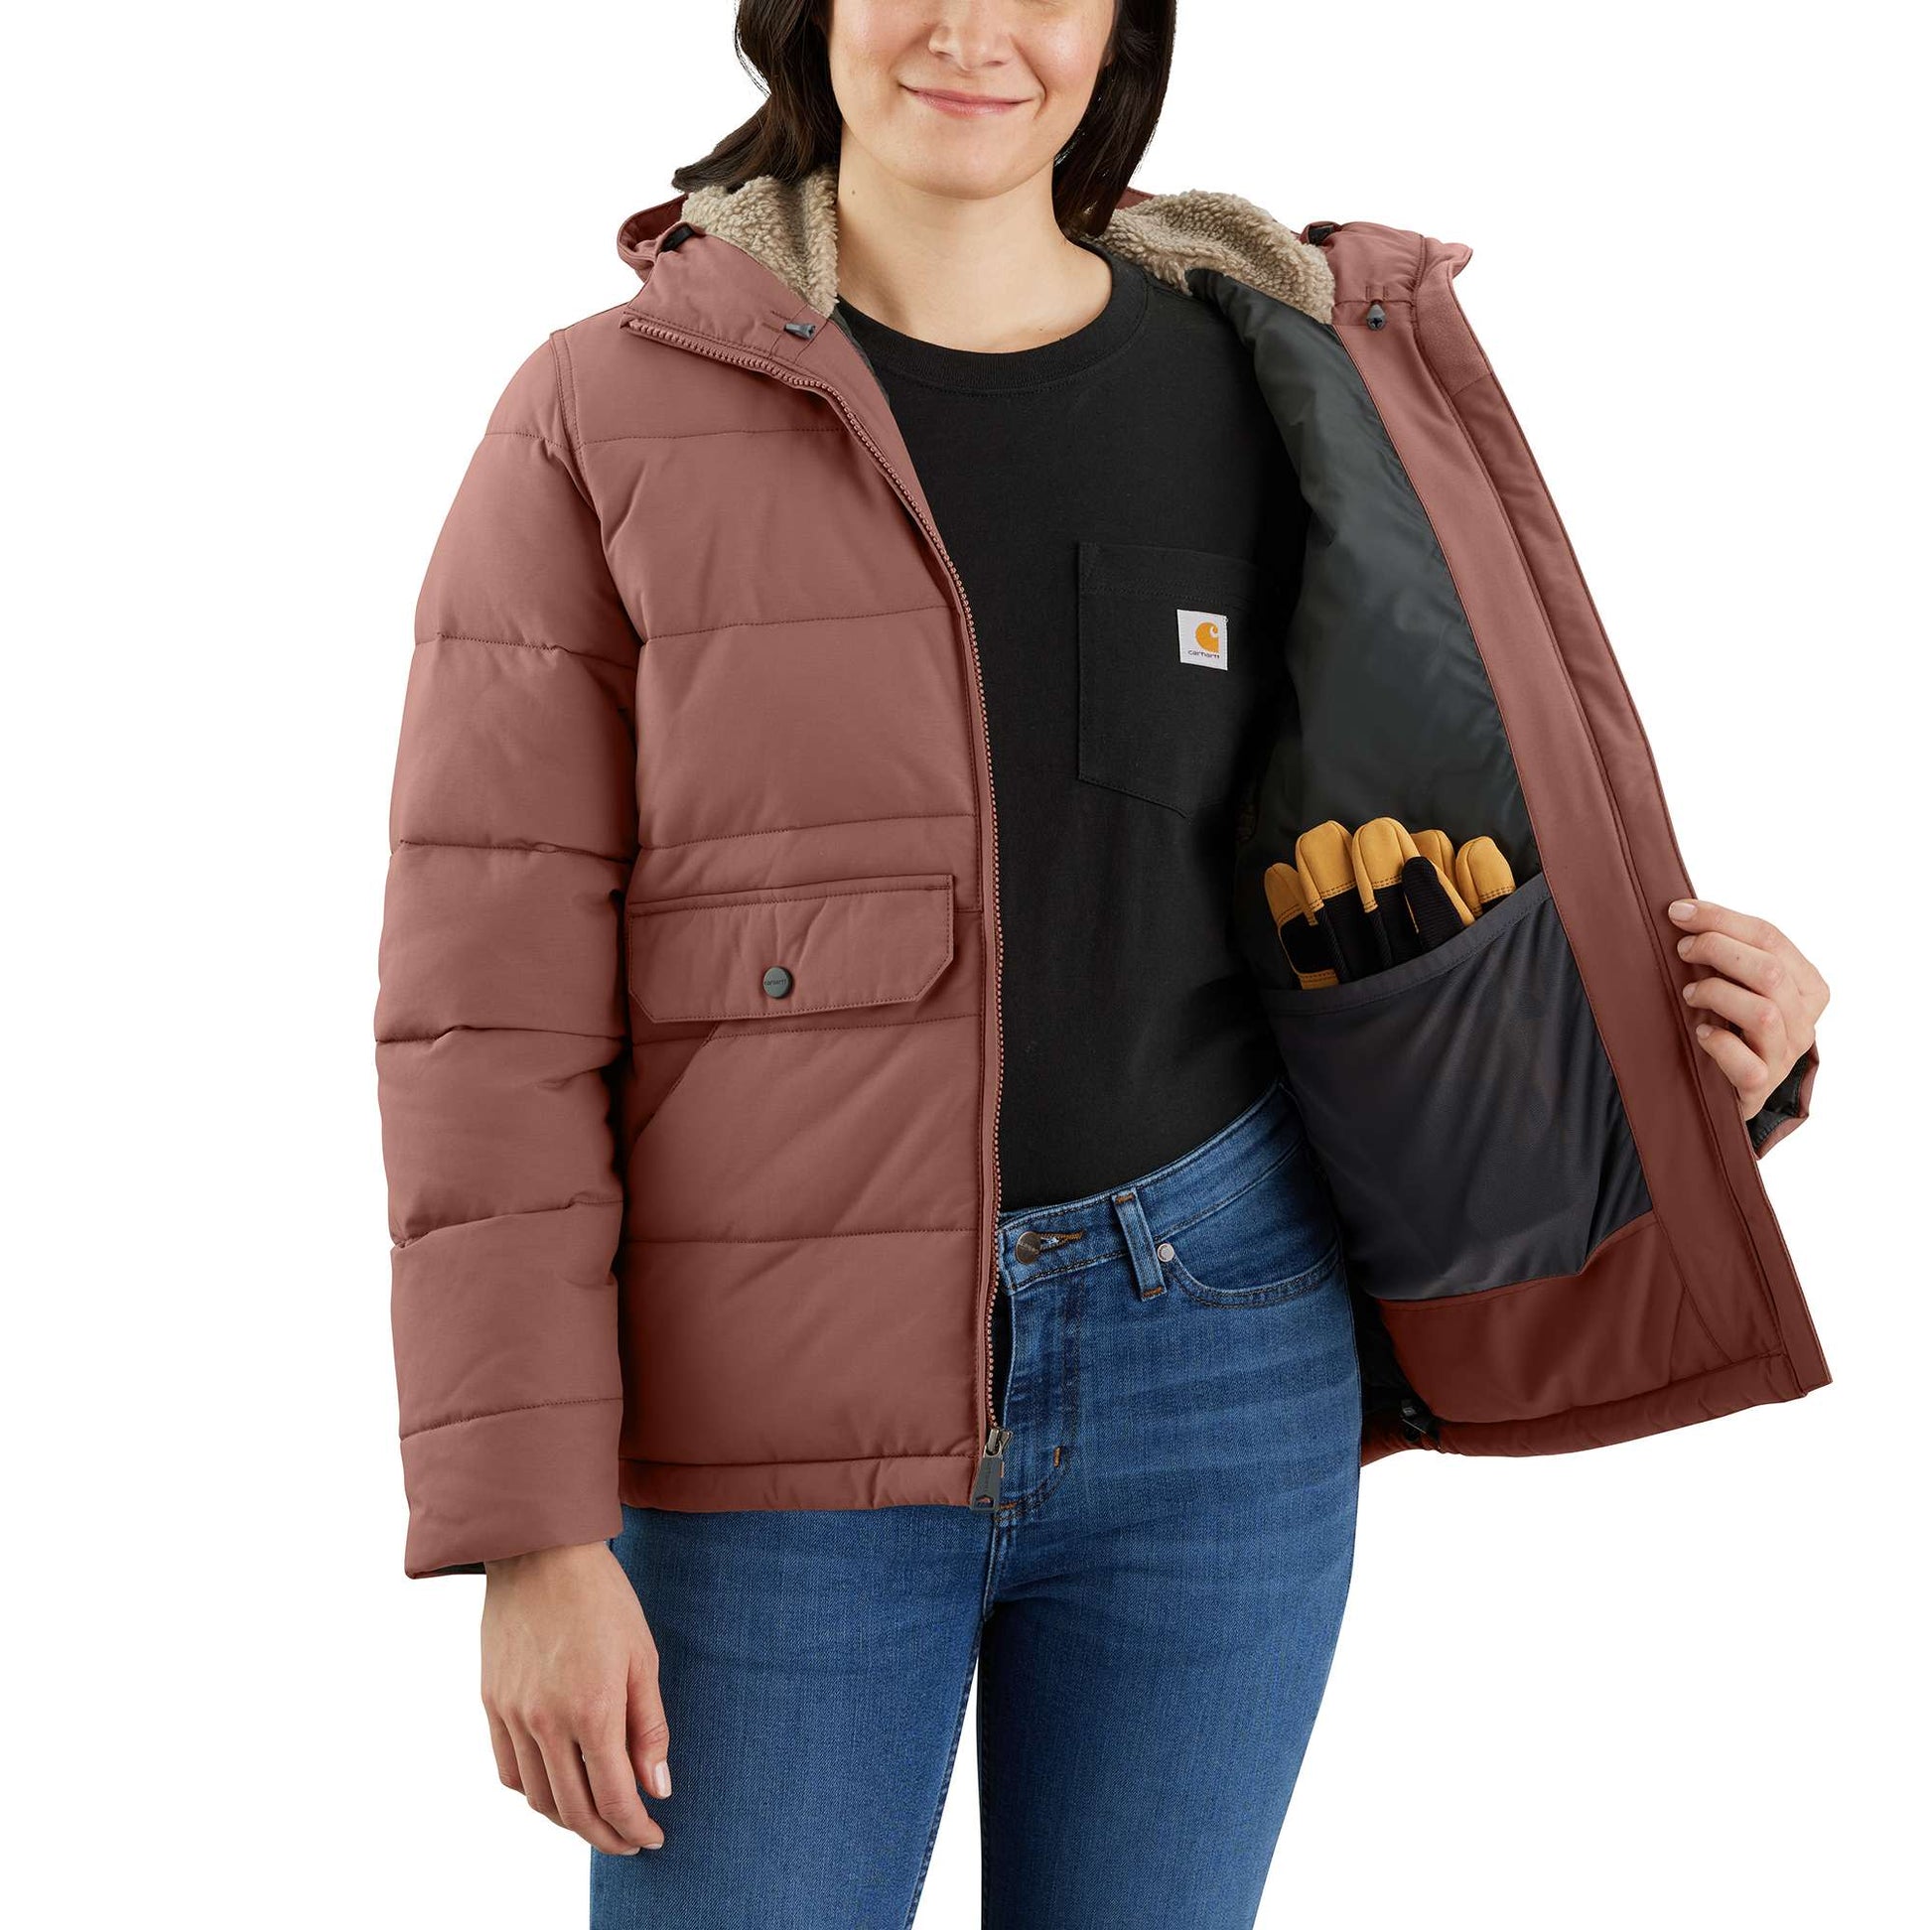 Carhartt Women's Montana Relaxed Fit Insulated Jacket